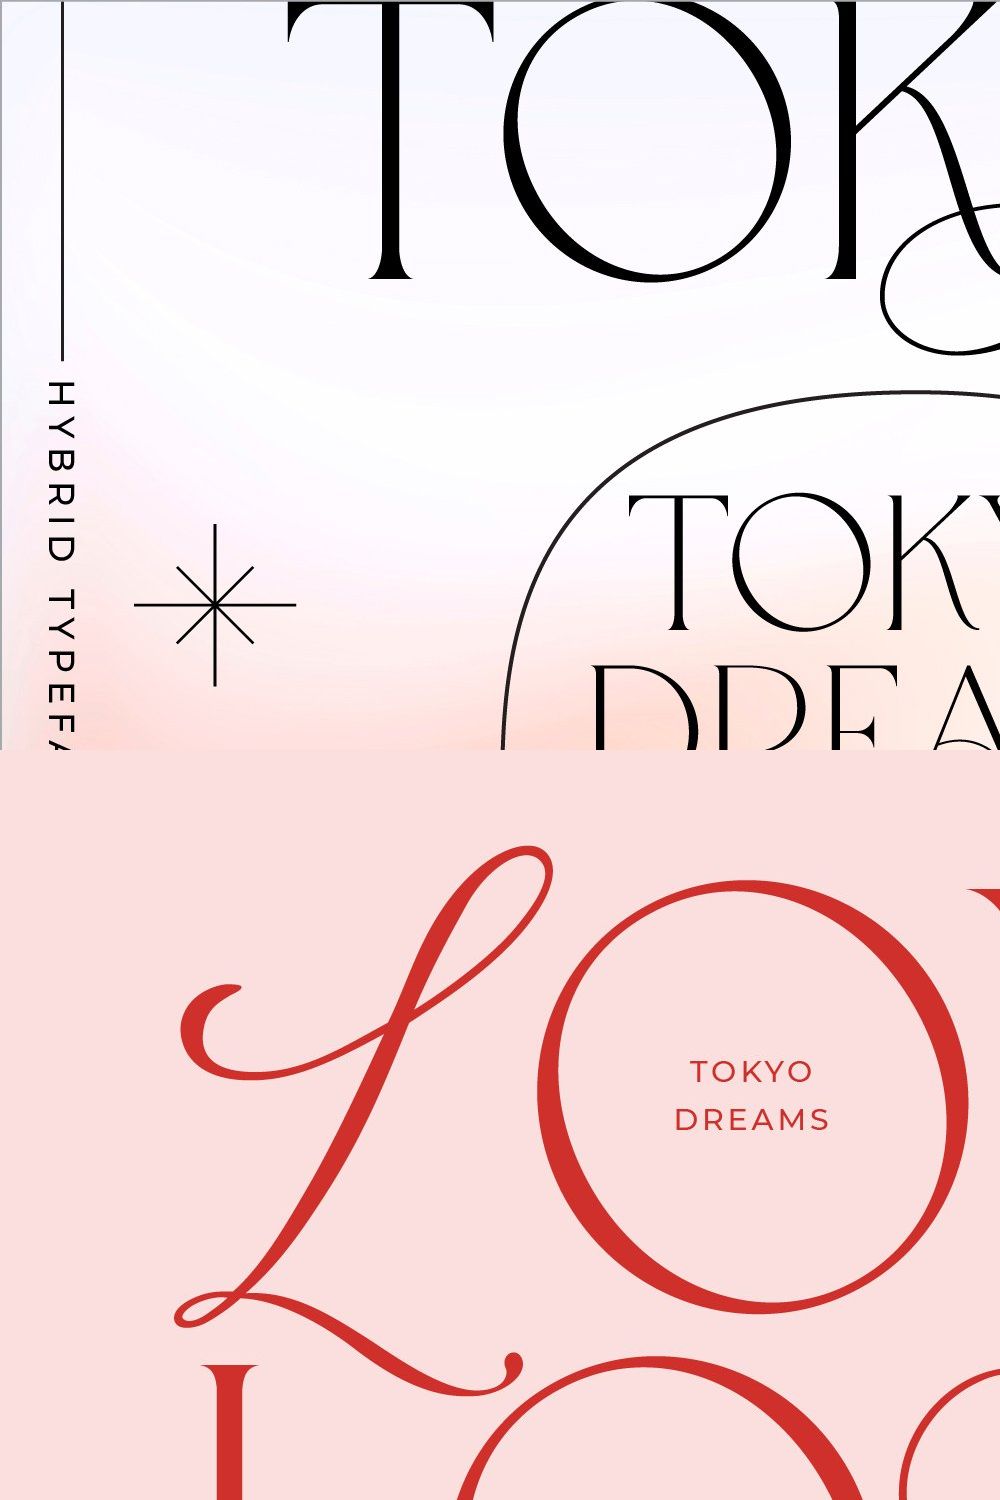 Tokyo Dreams Display Ligature Serif pinterest preview image.